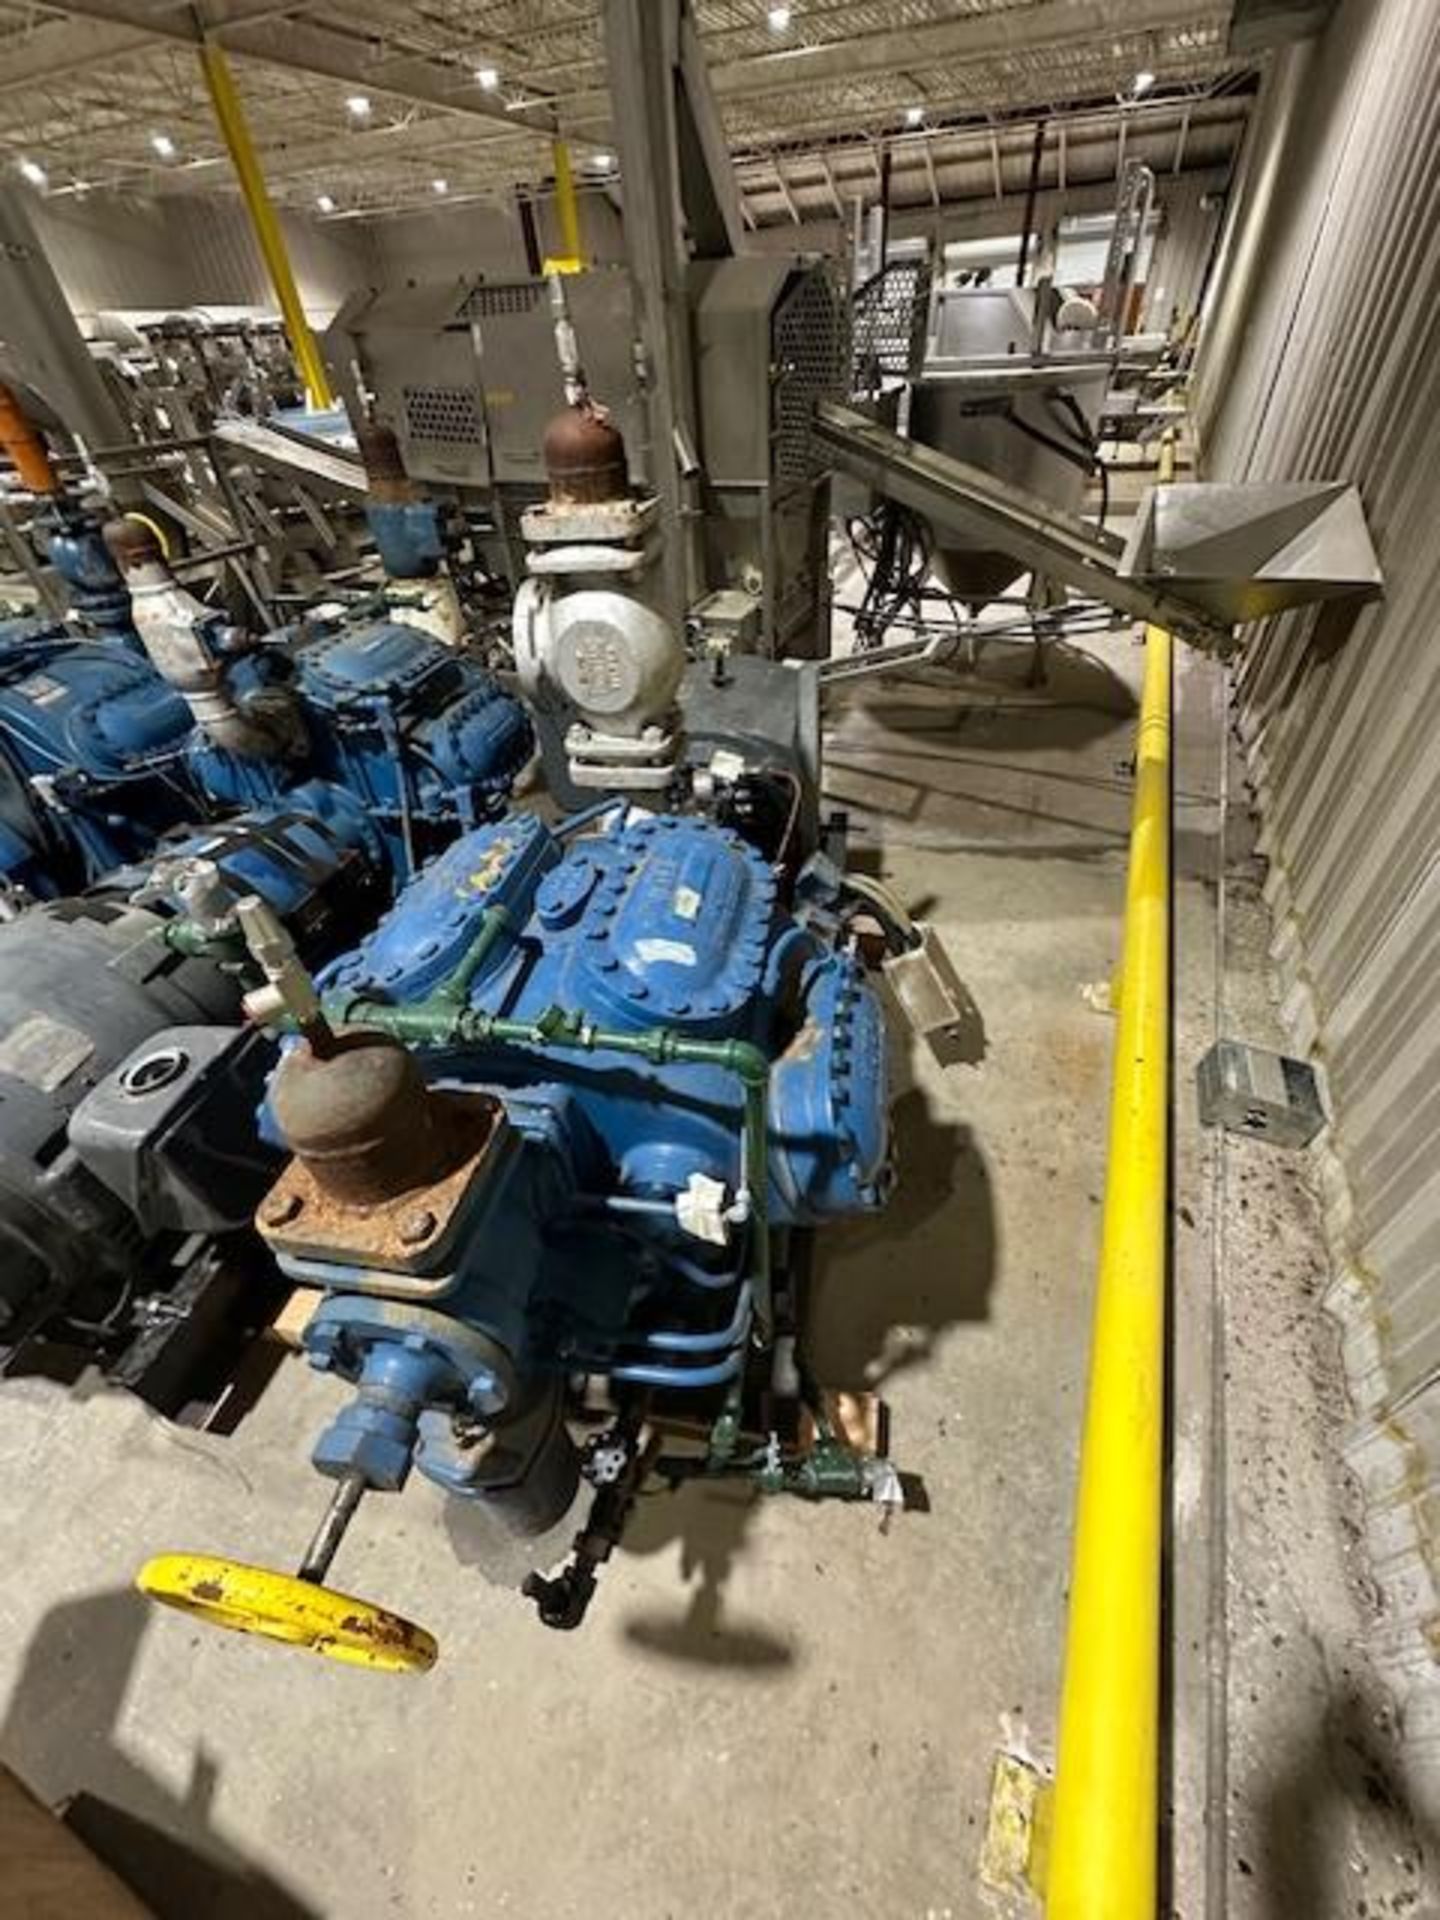 (Located in Ozark, AL) Vilter Reciprocating Ammonia Compressor, Model# A11K458XLD